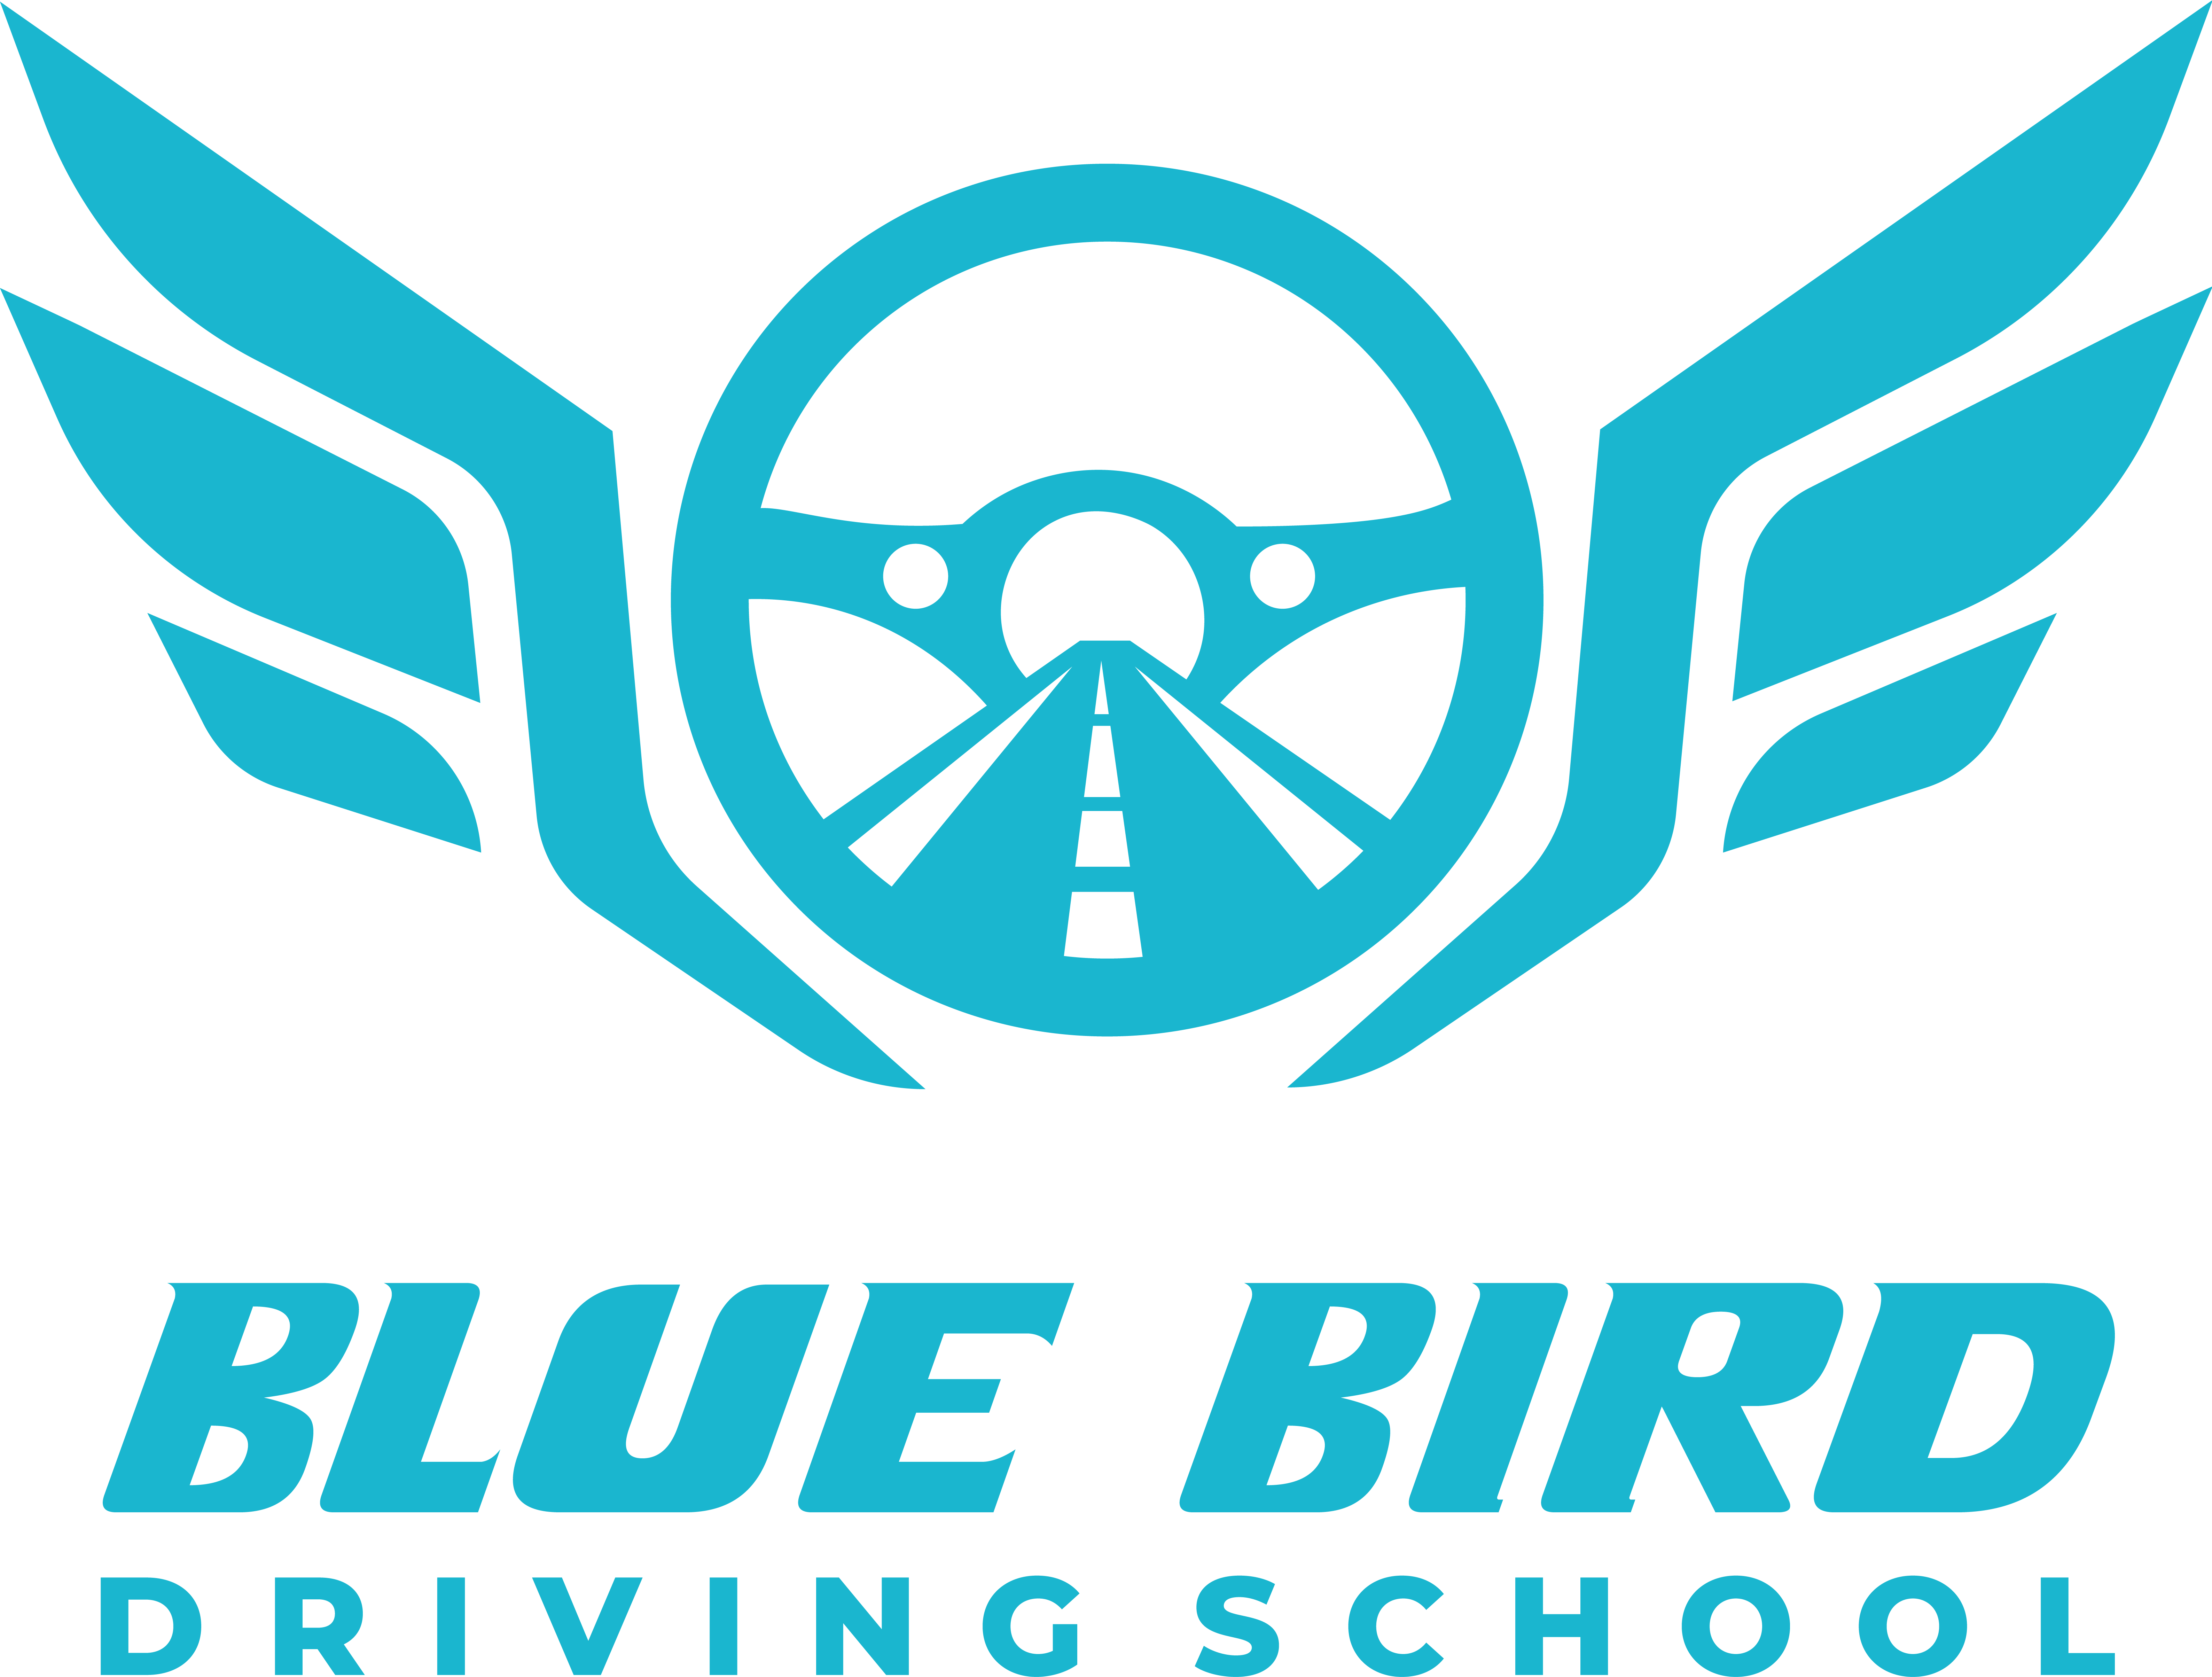 Blu bird logo